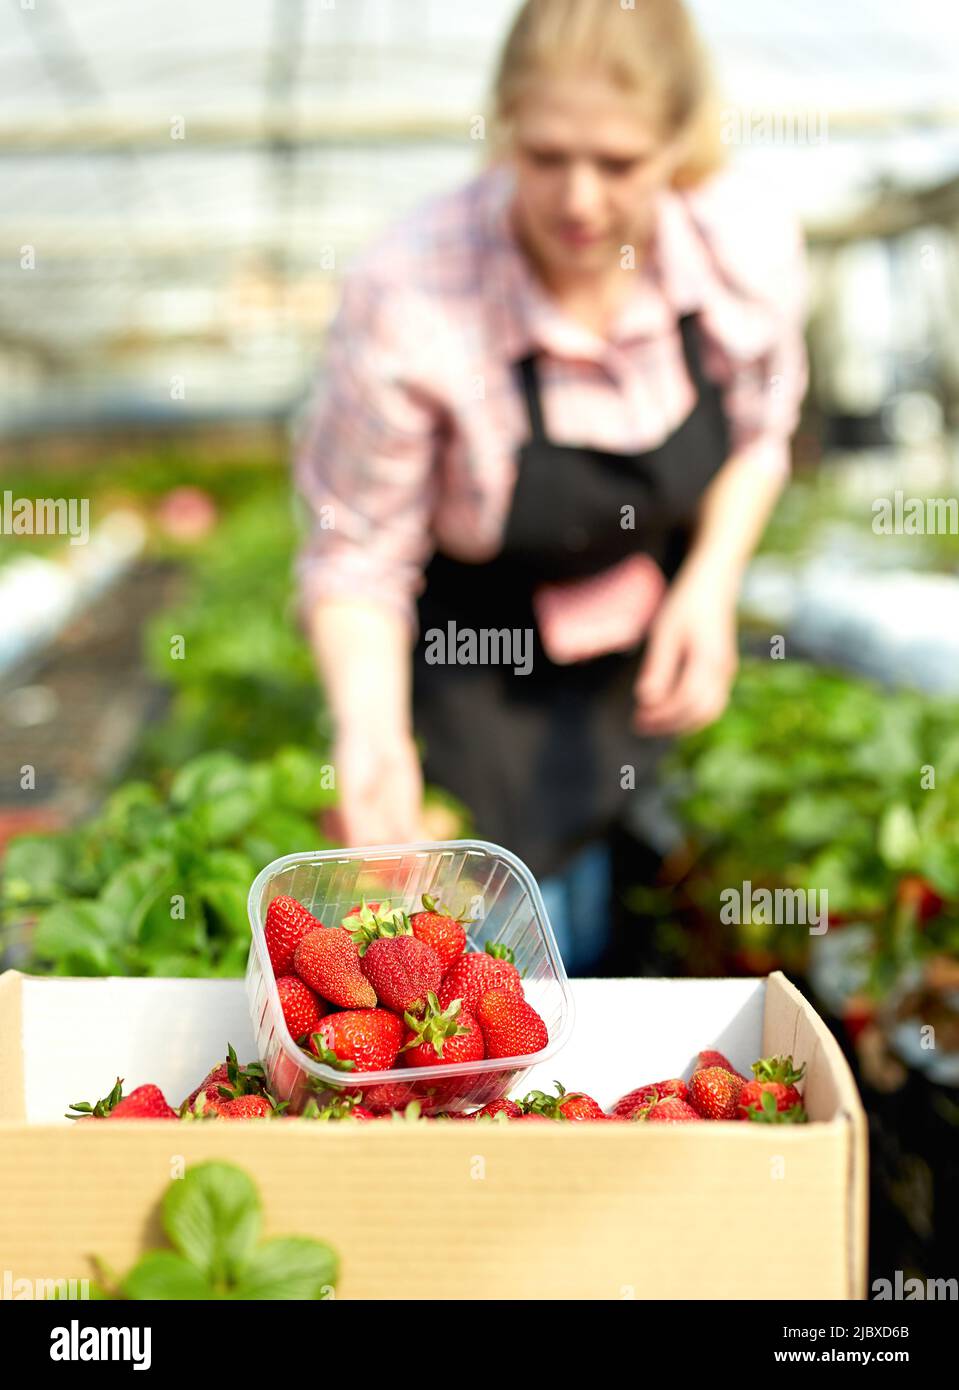 Woman gardener in apronduring harvesting of fresh strawberries Stock Photo